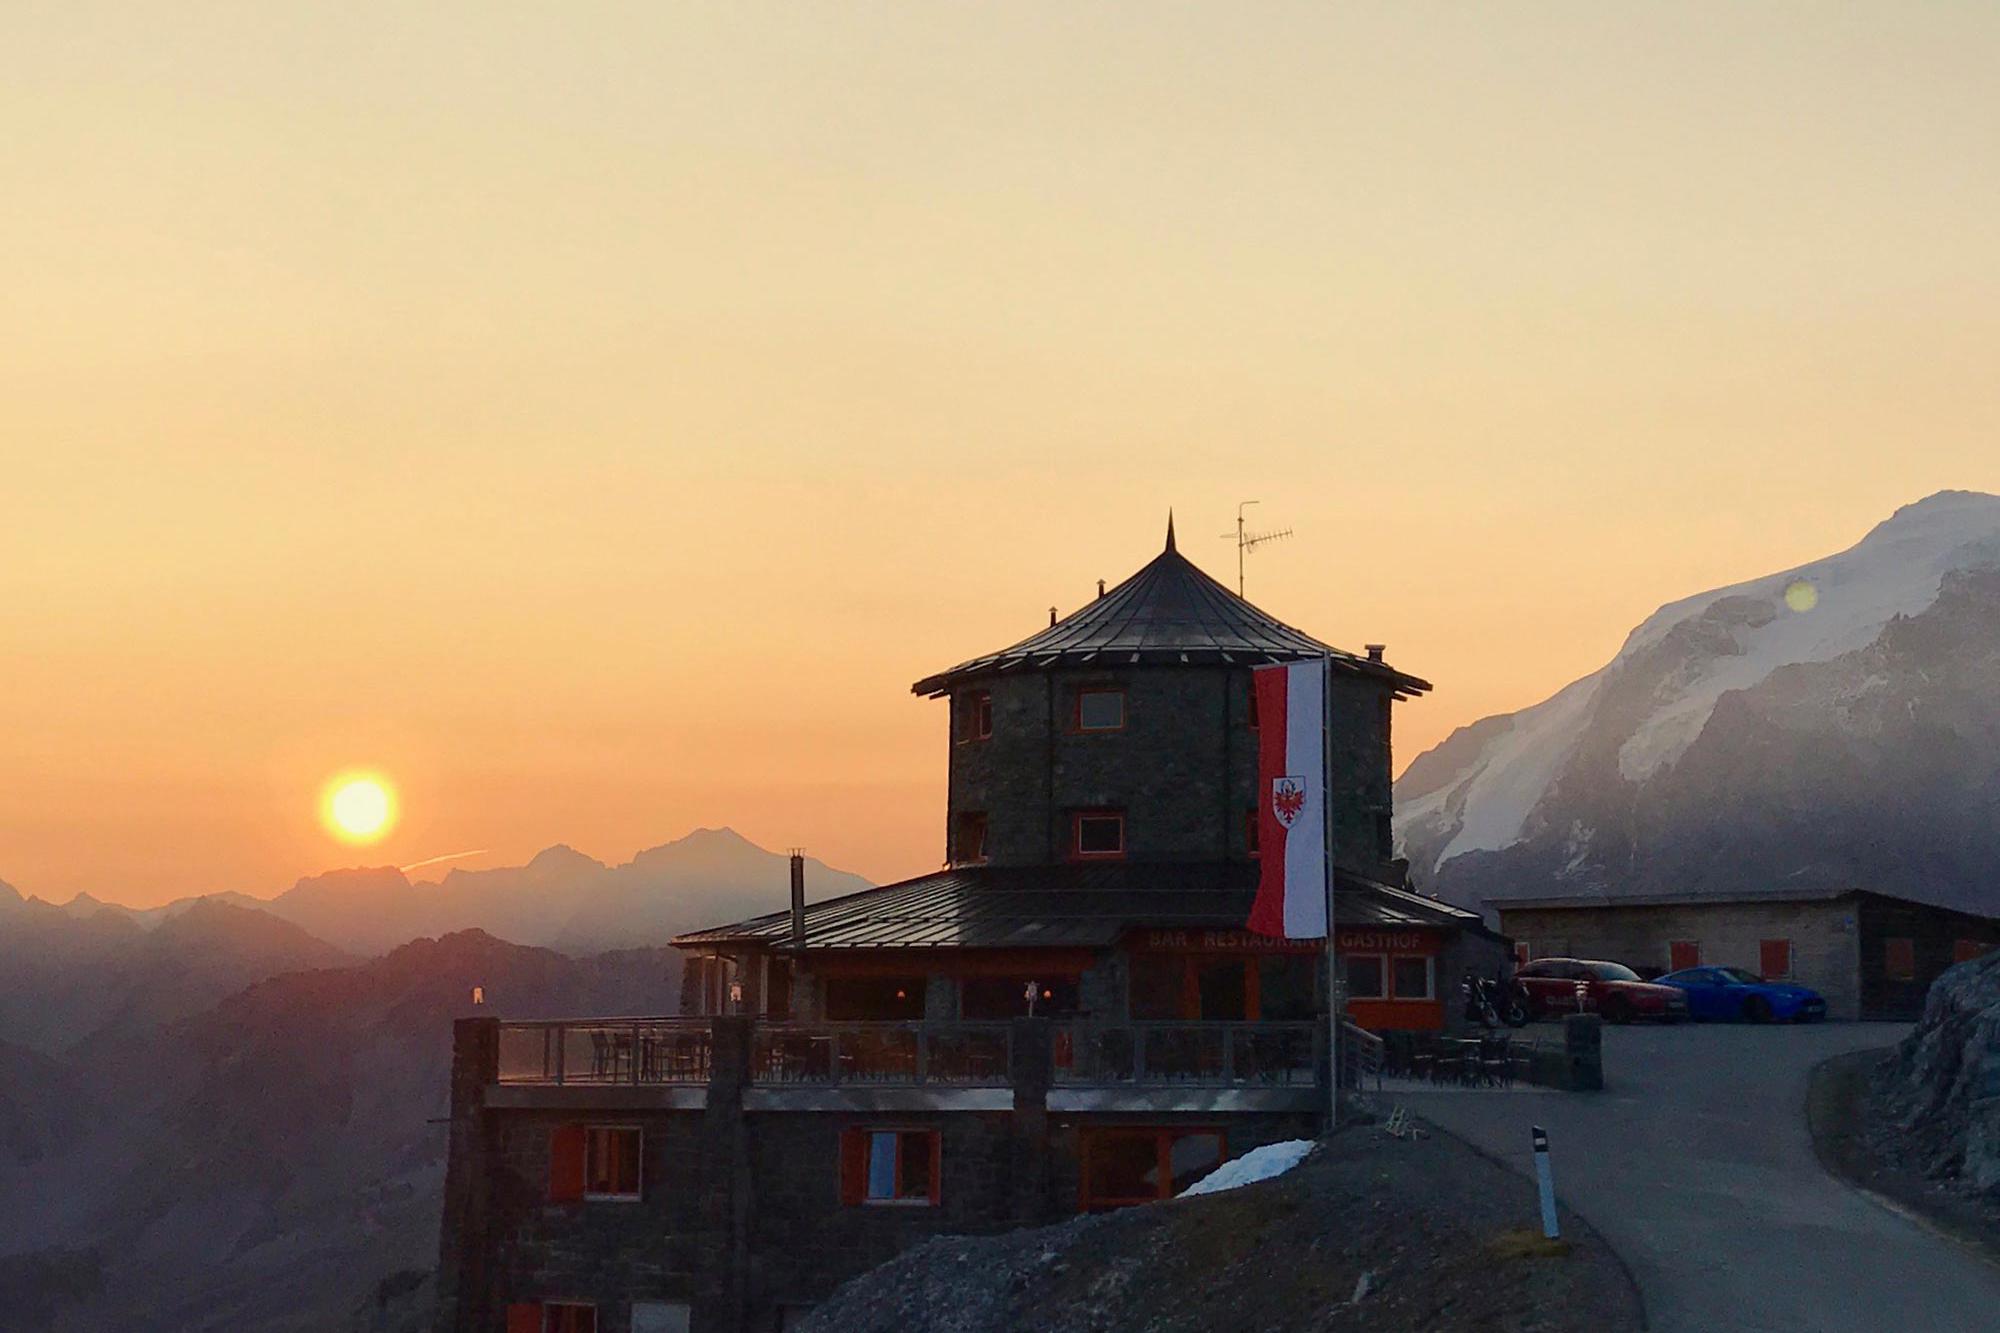 Sunrise at the Tibet Hut on the Stelvio Pass